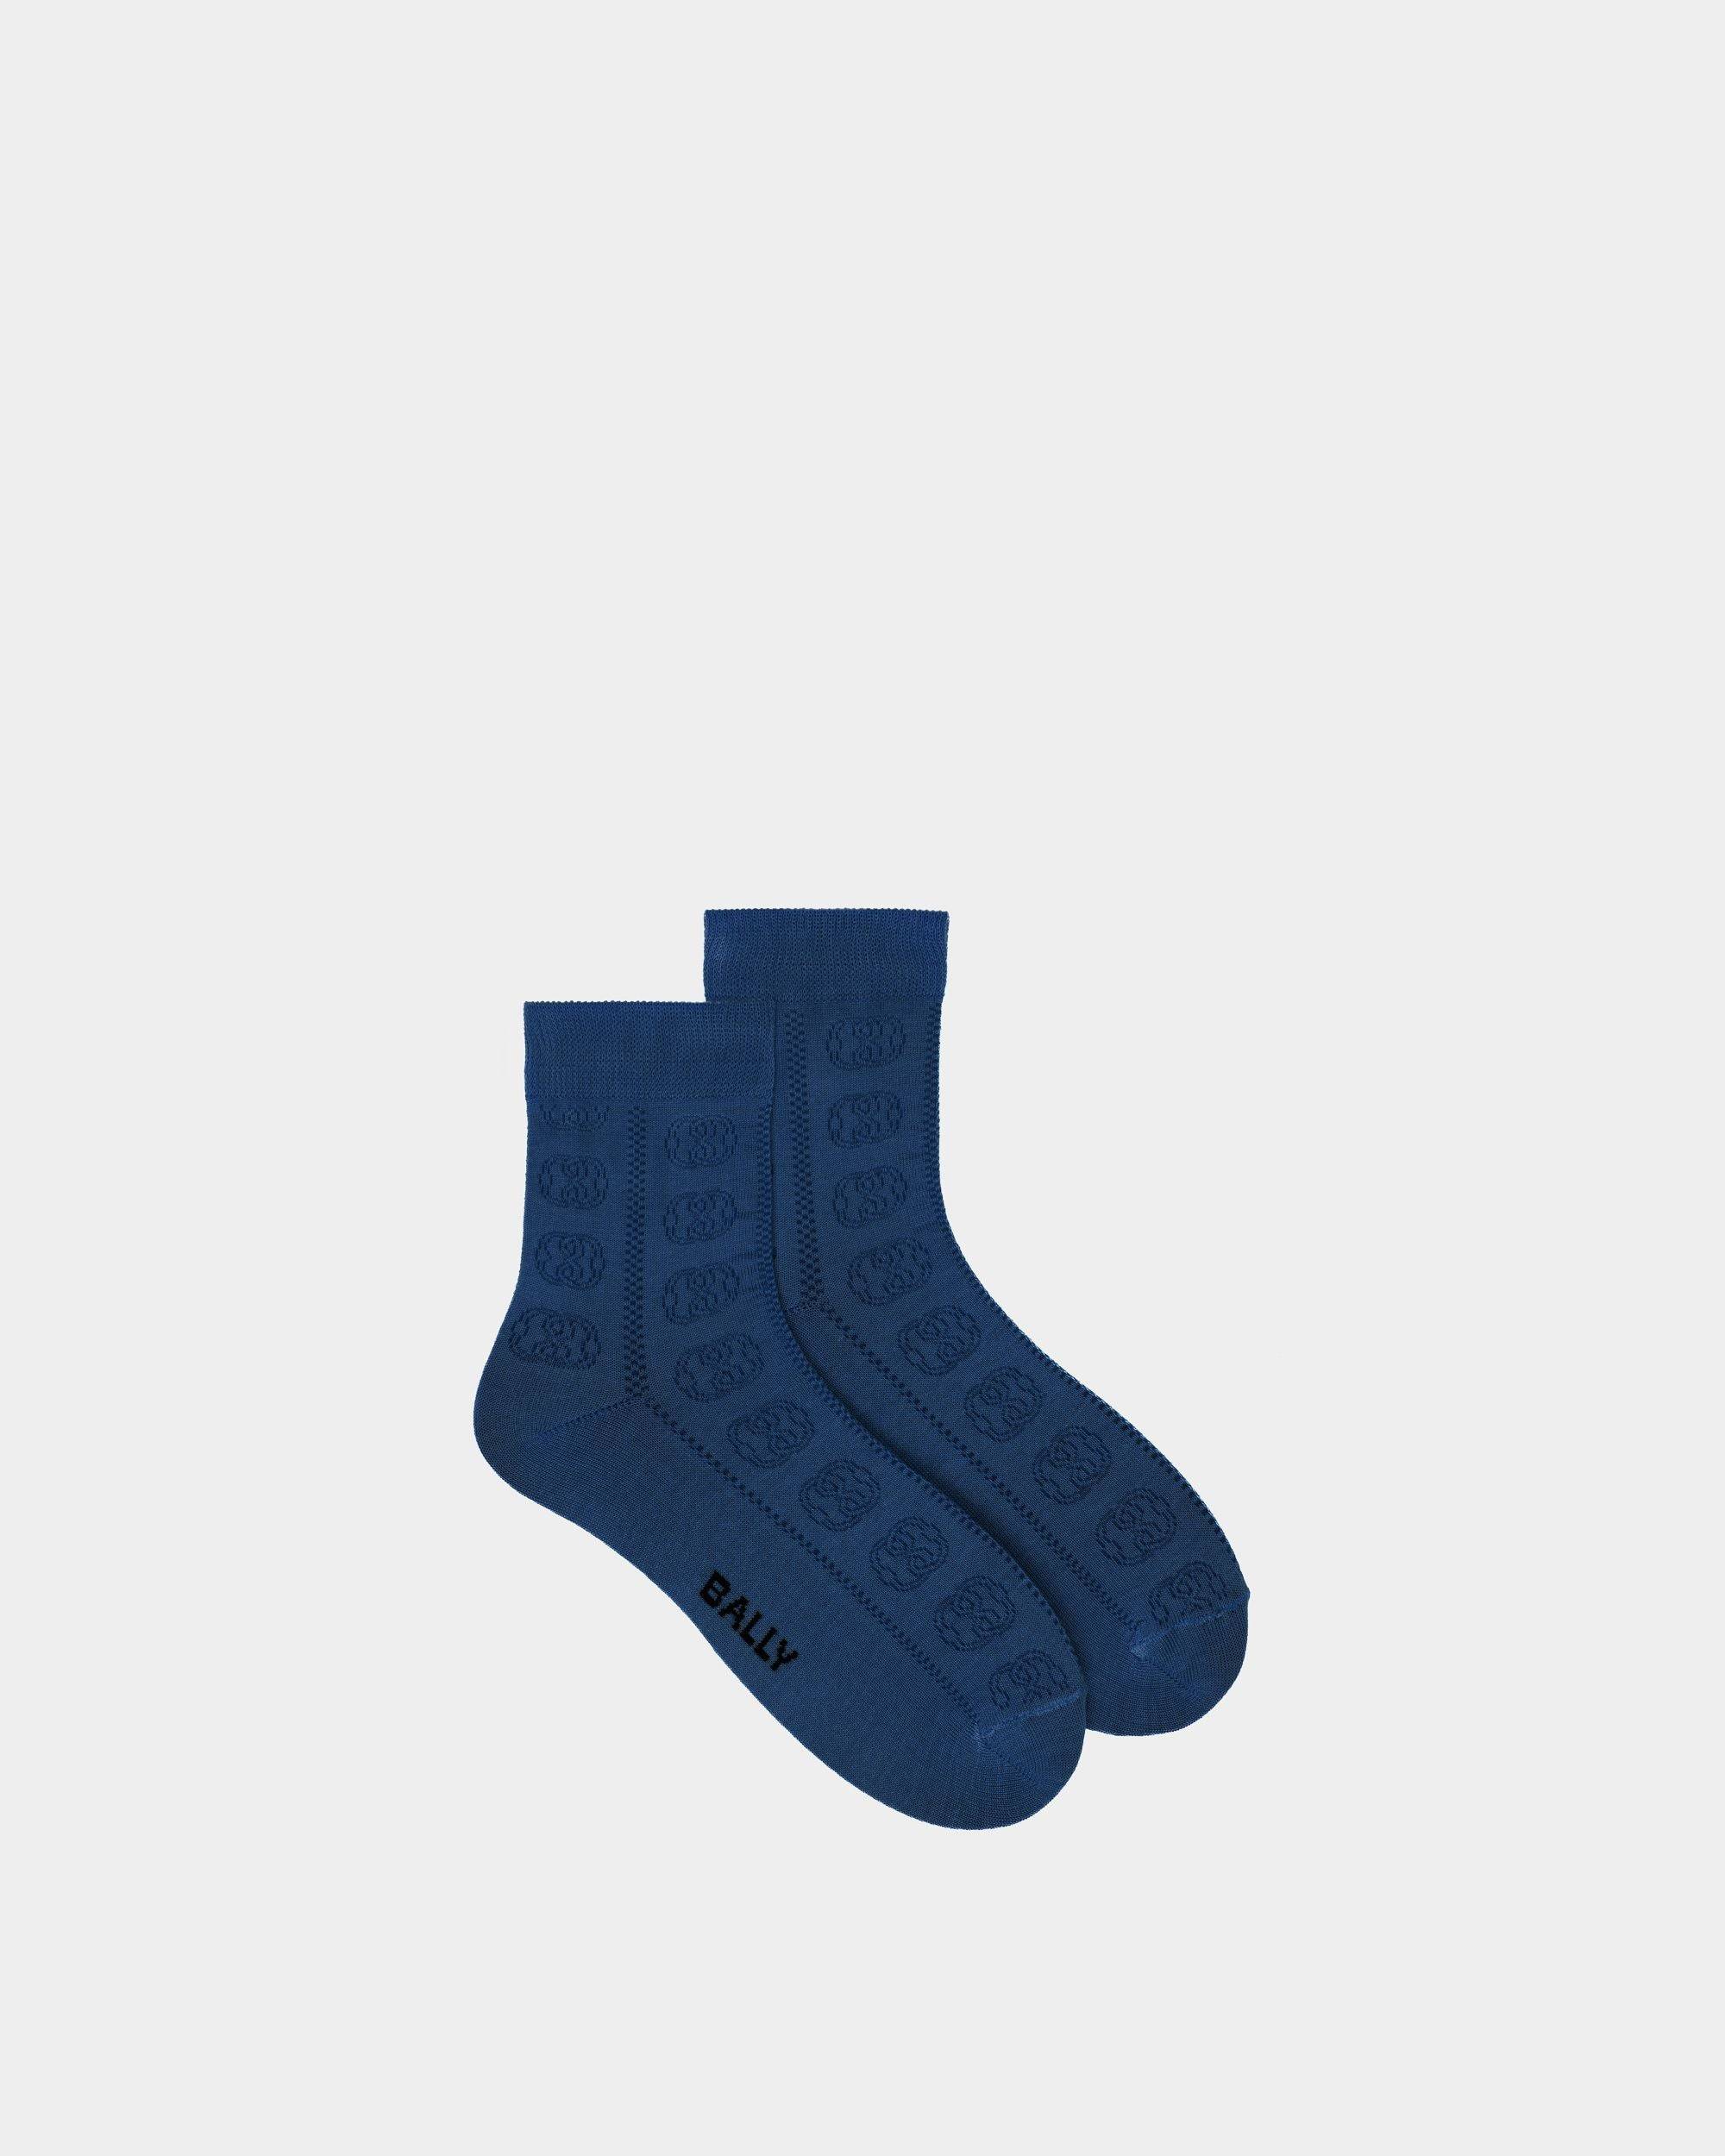 Women's Socks in Blue Cotton | Bally | Still Life Top